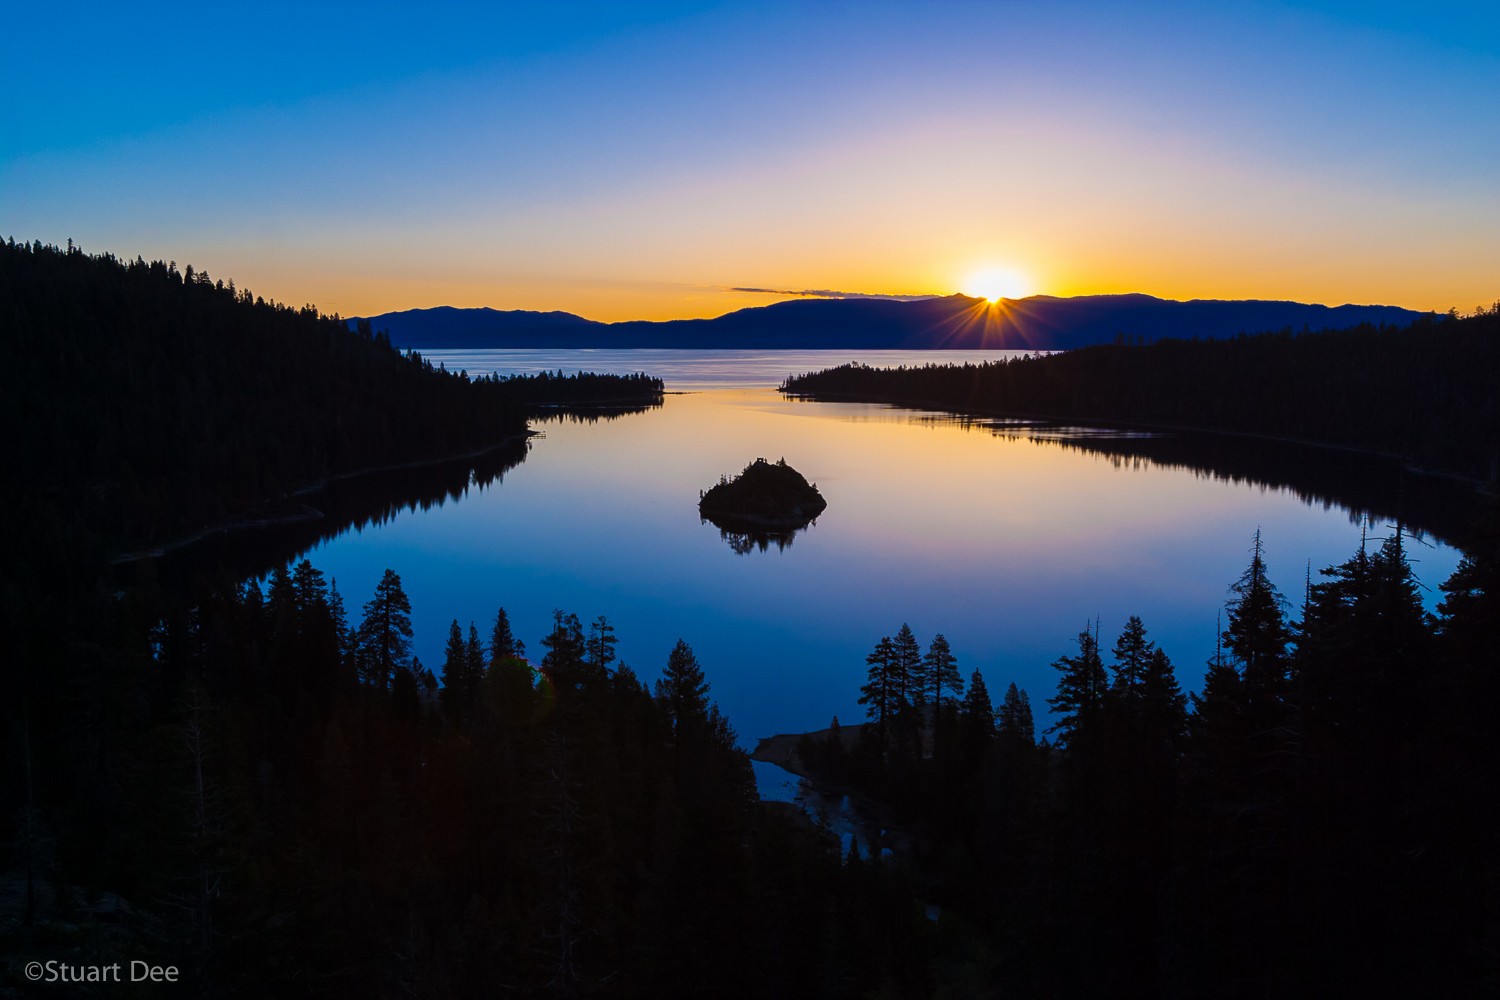  Sunrise at Emerald Bay, showing Fannette Island, Lake Tahoe, California, USA 